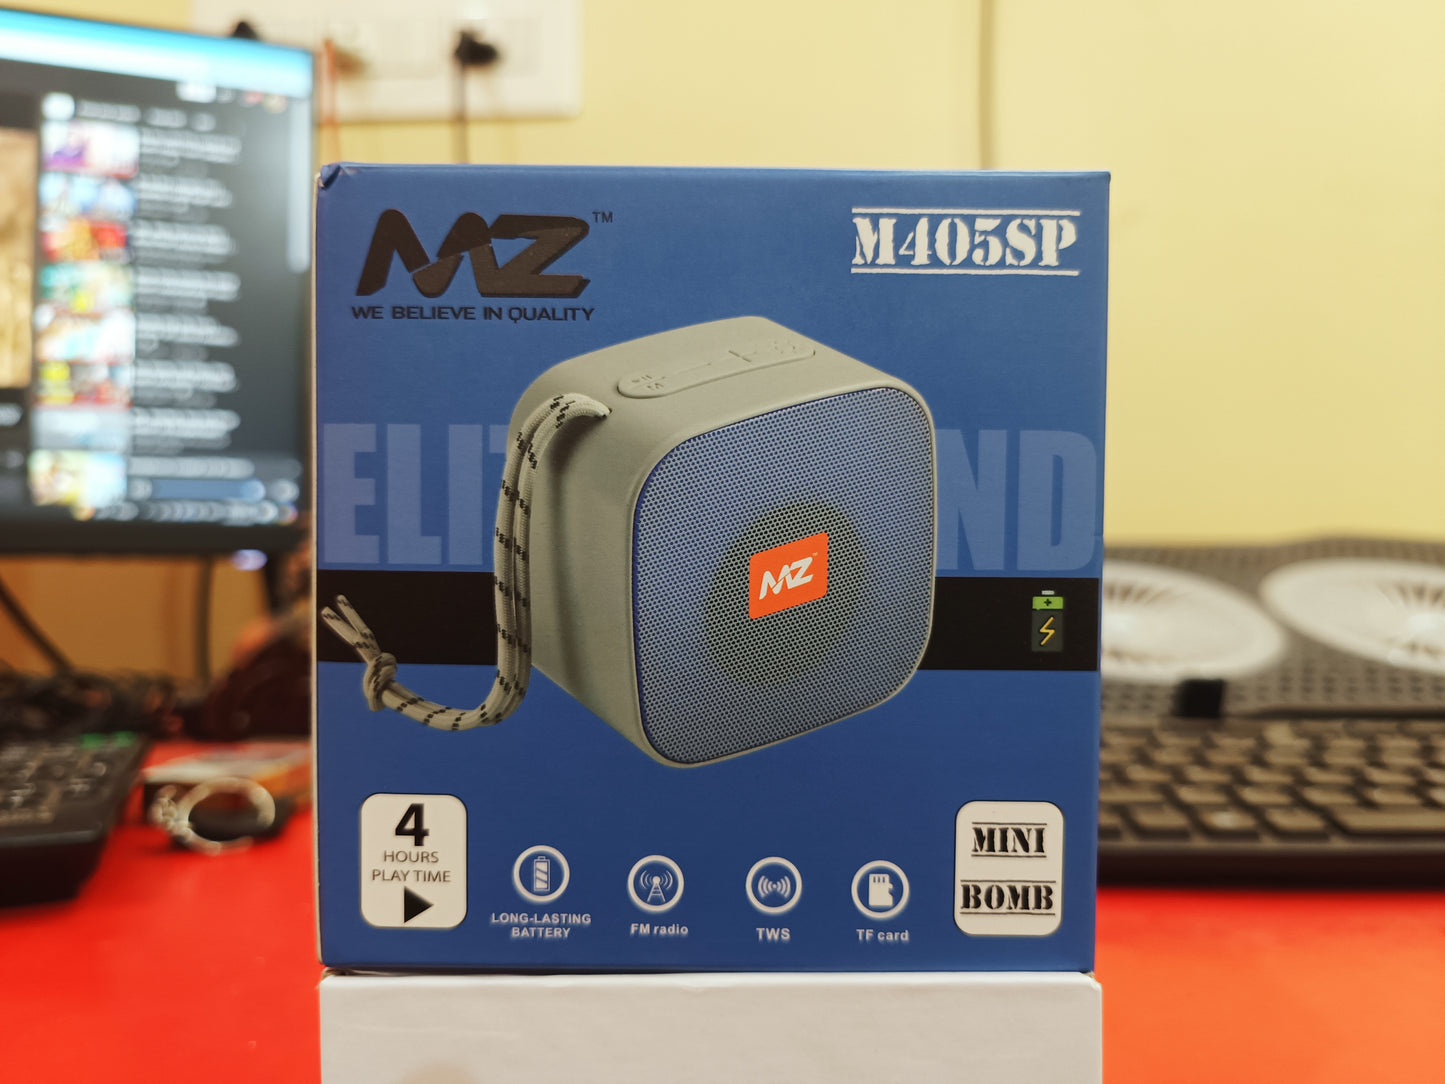 MZ M405SP Mini Bomb Elite Sound Bluetooth Speaker